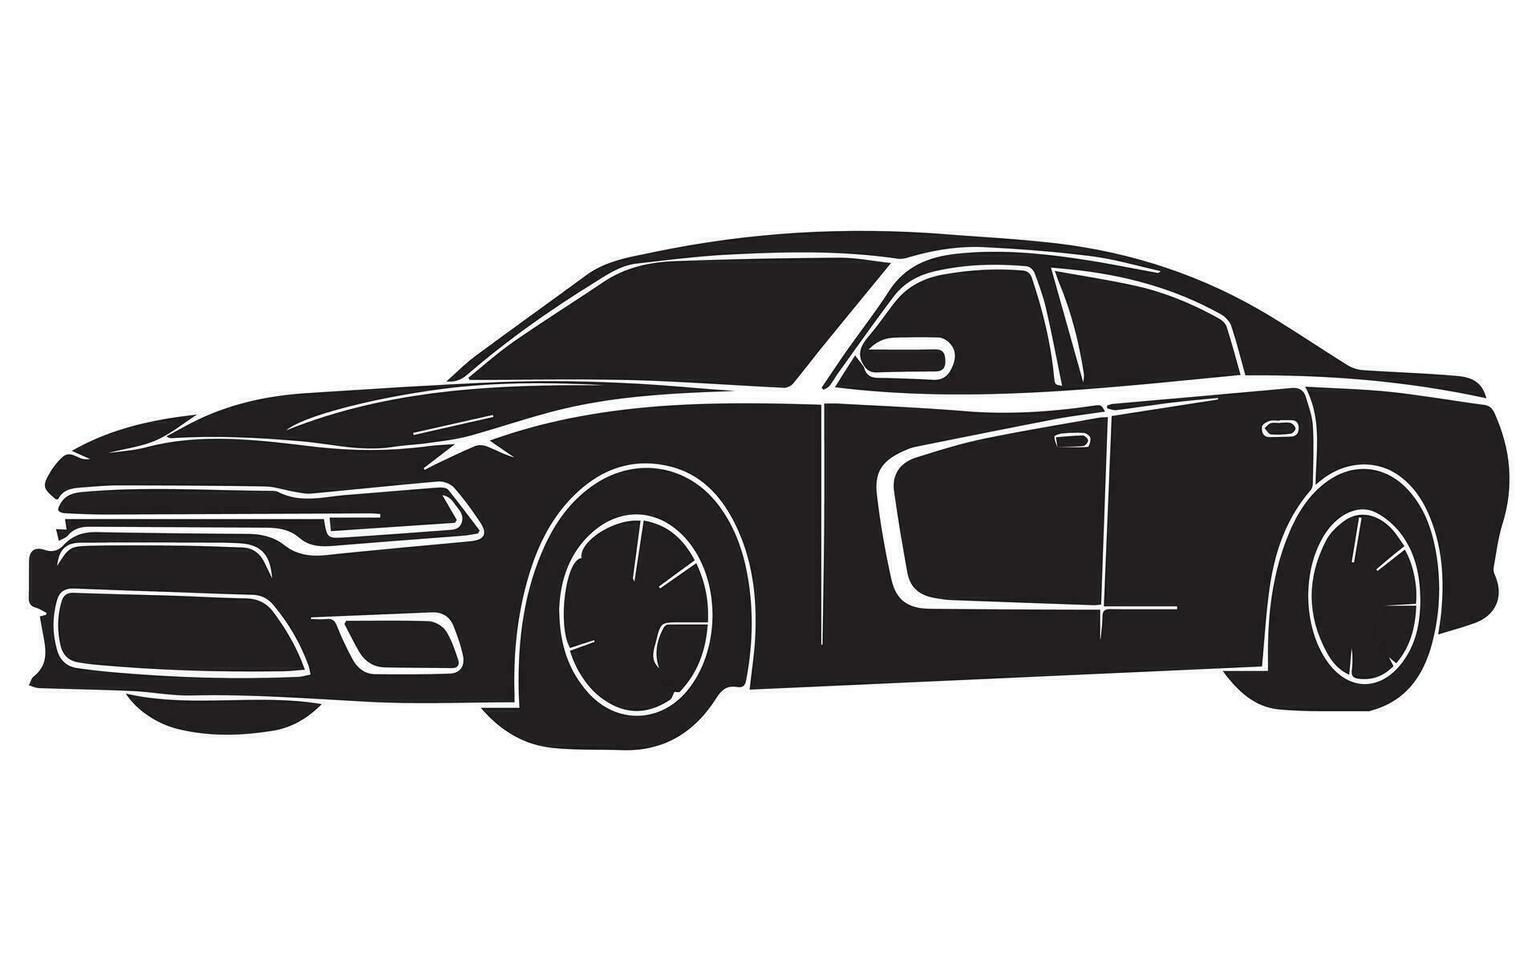 silhouette car vector symbol icon design,set of car silhouettes illustrations